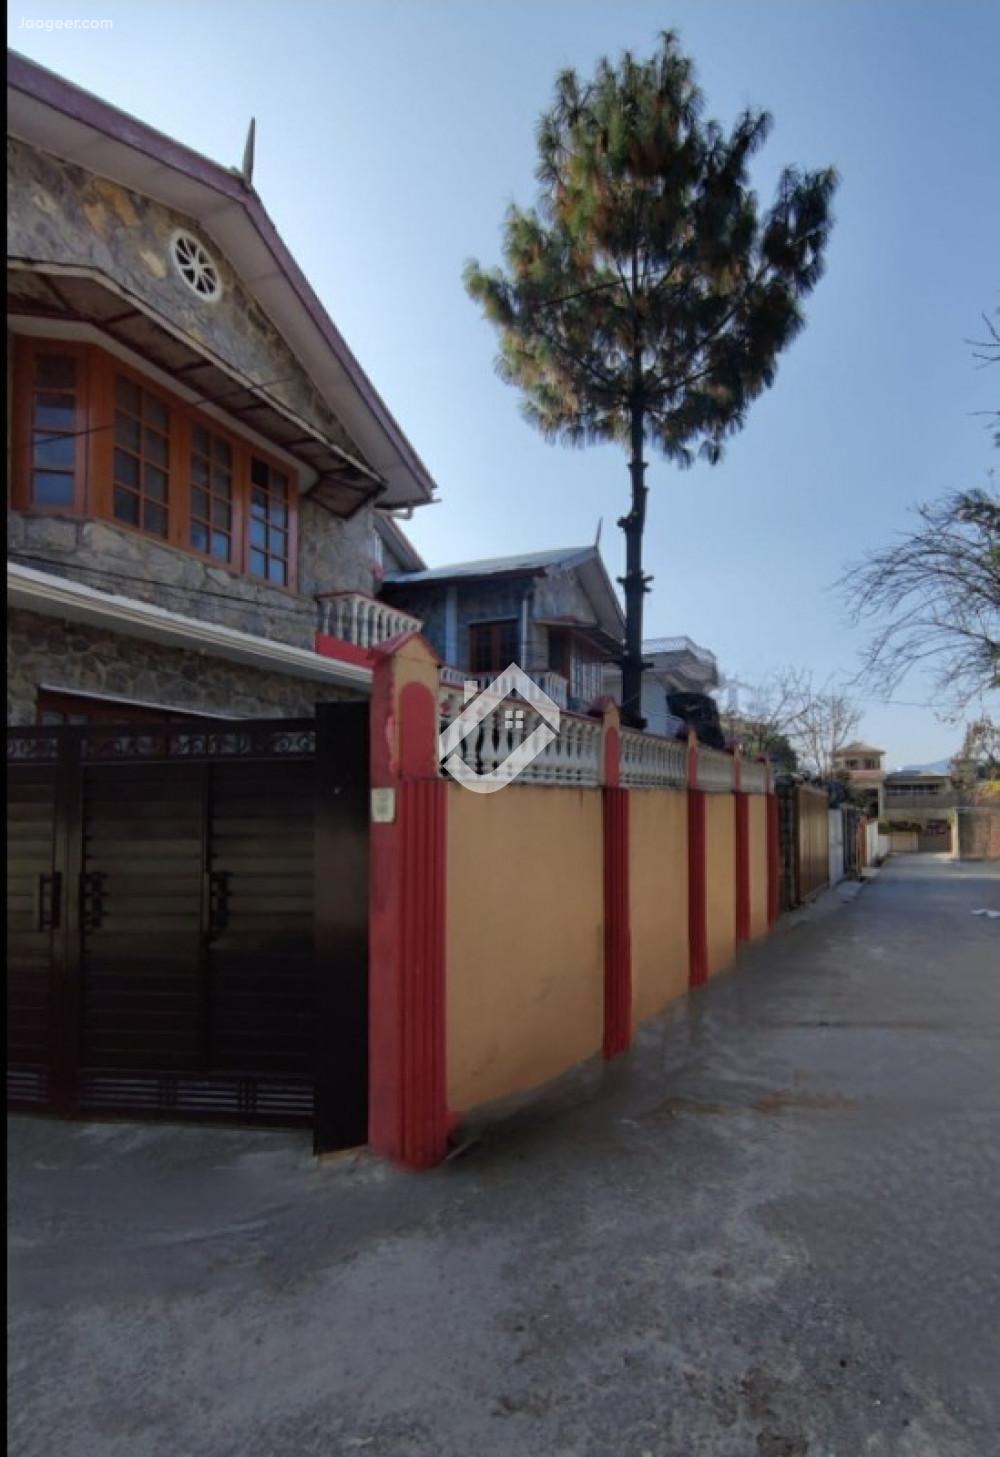 Main image 15 Marla House For Sale In Habibullah Colony Habibullah Colony, Abbottabad